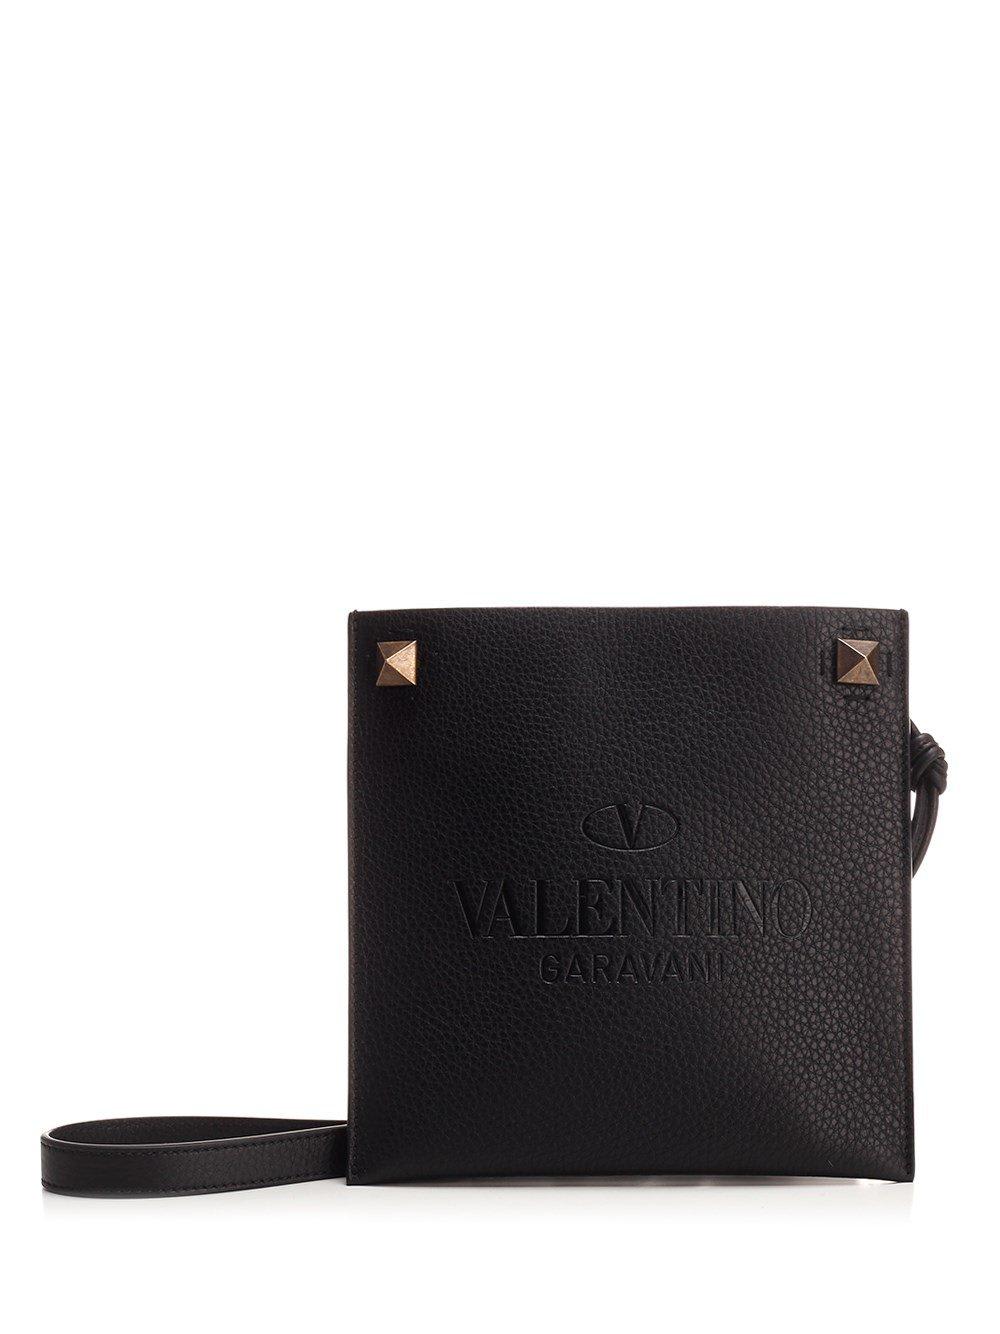 Valentino Garavani Rockstud Identity Small Crossbody Bag